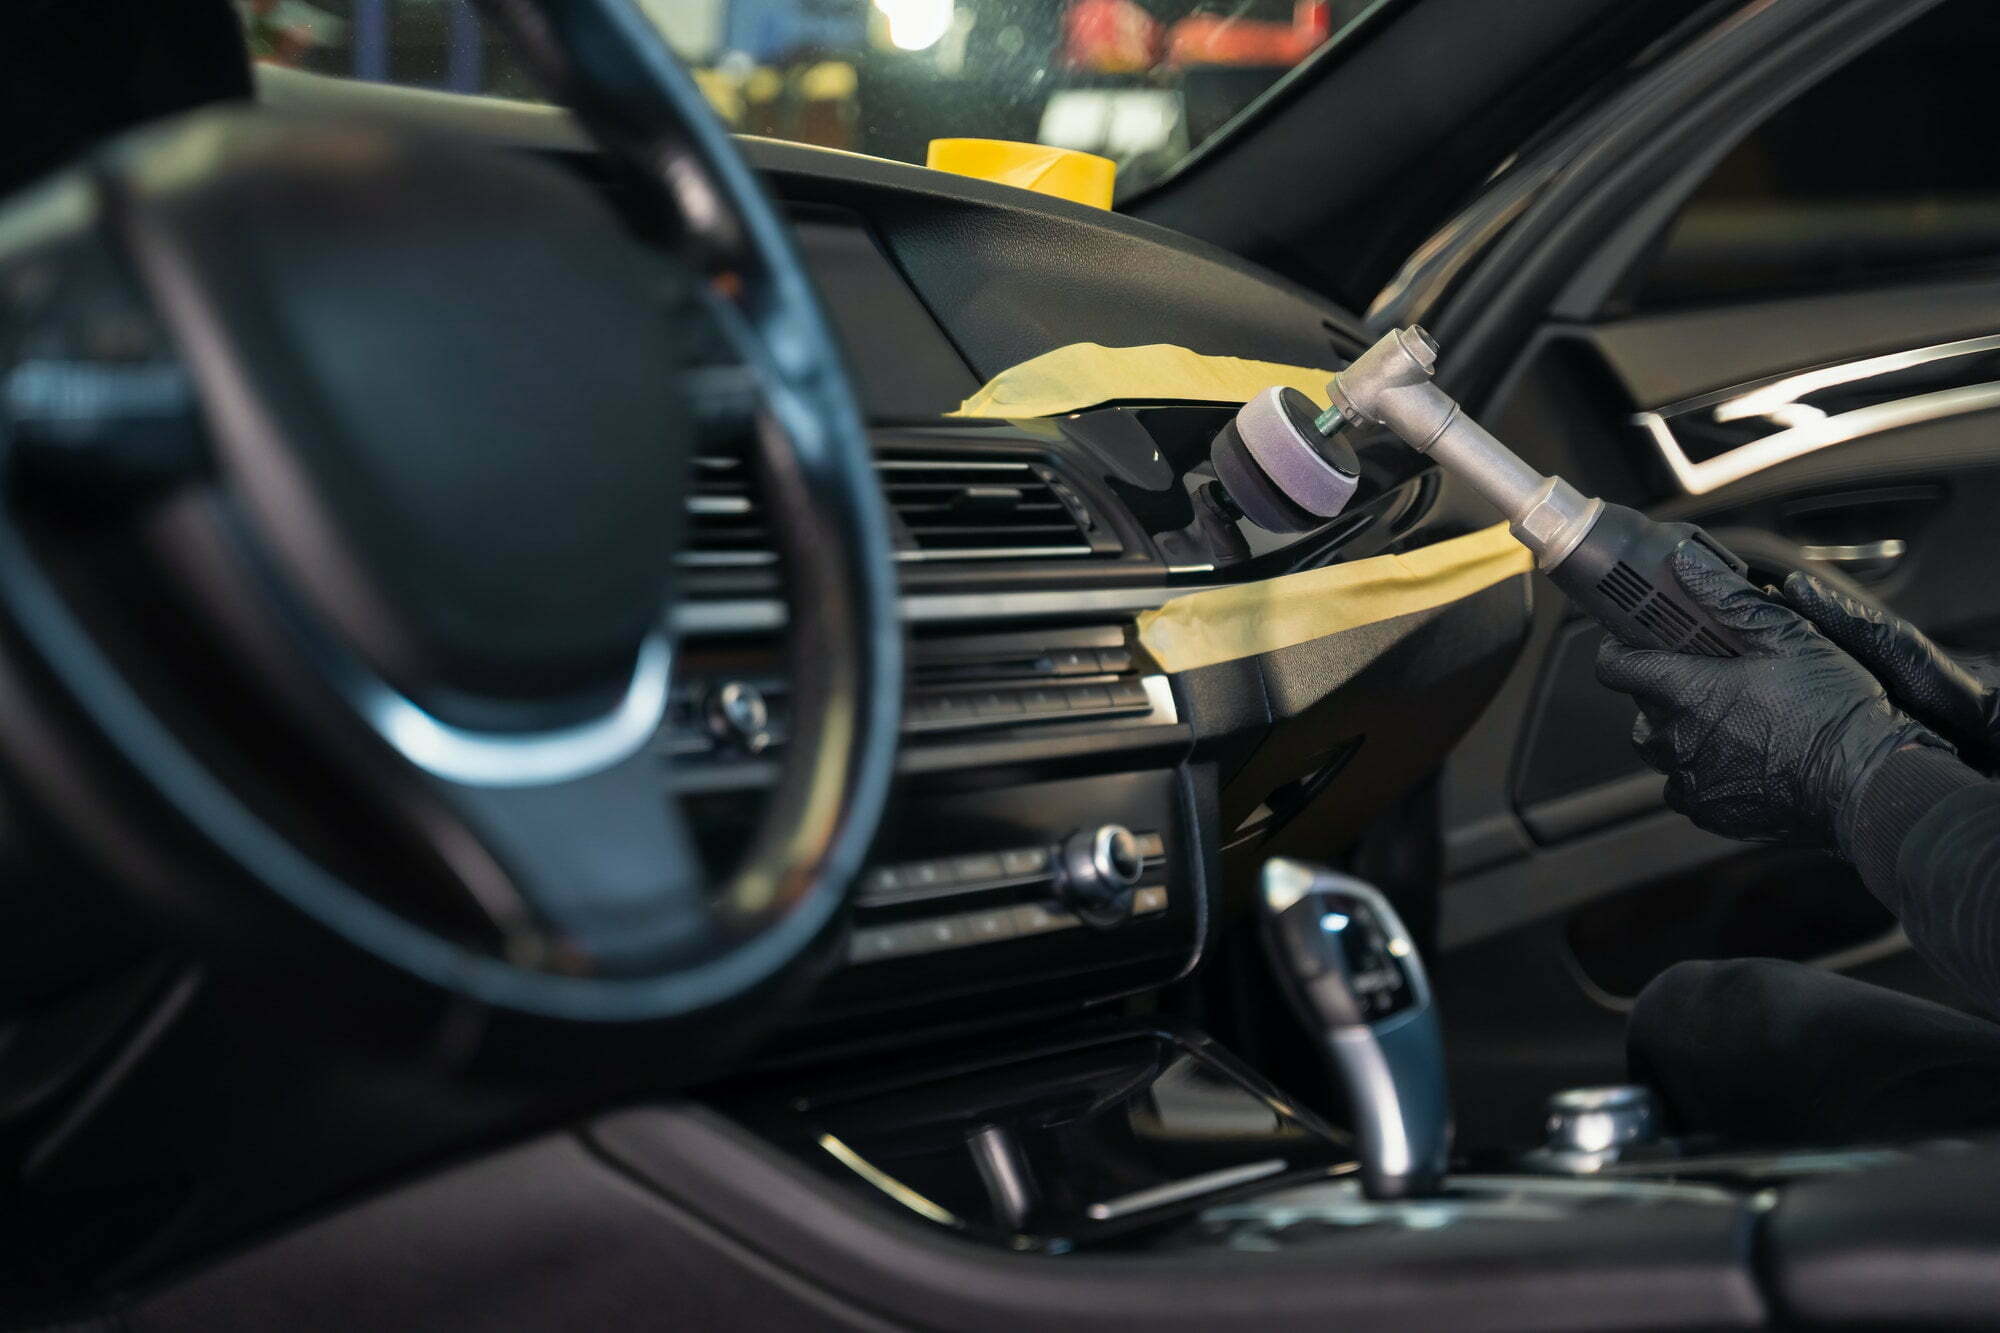 Professional polishing car interior trim. Auto detailing concept